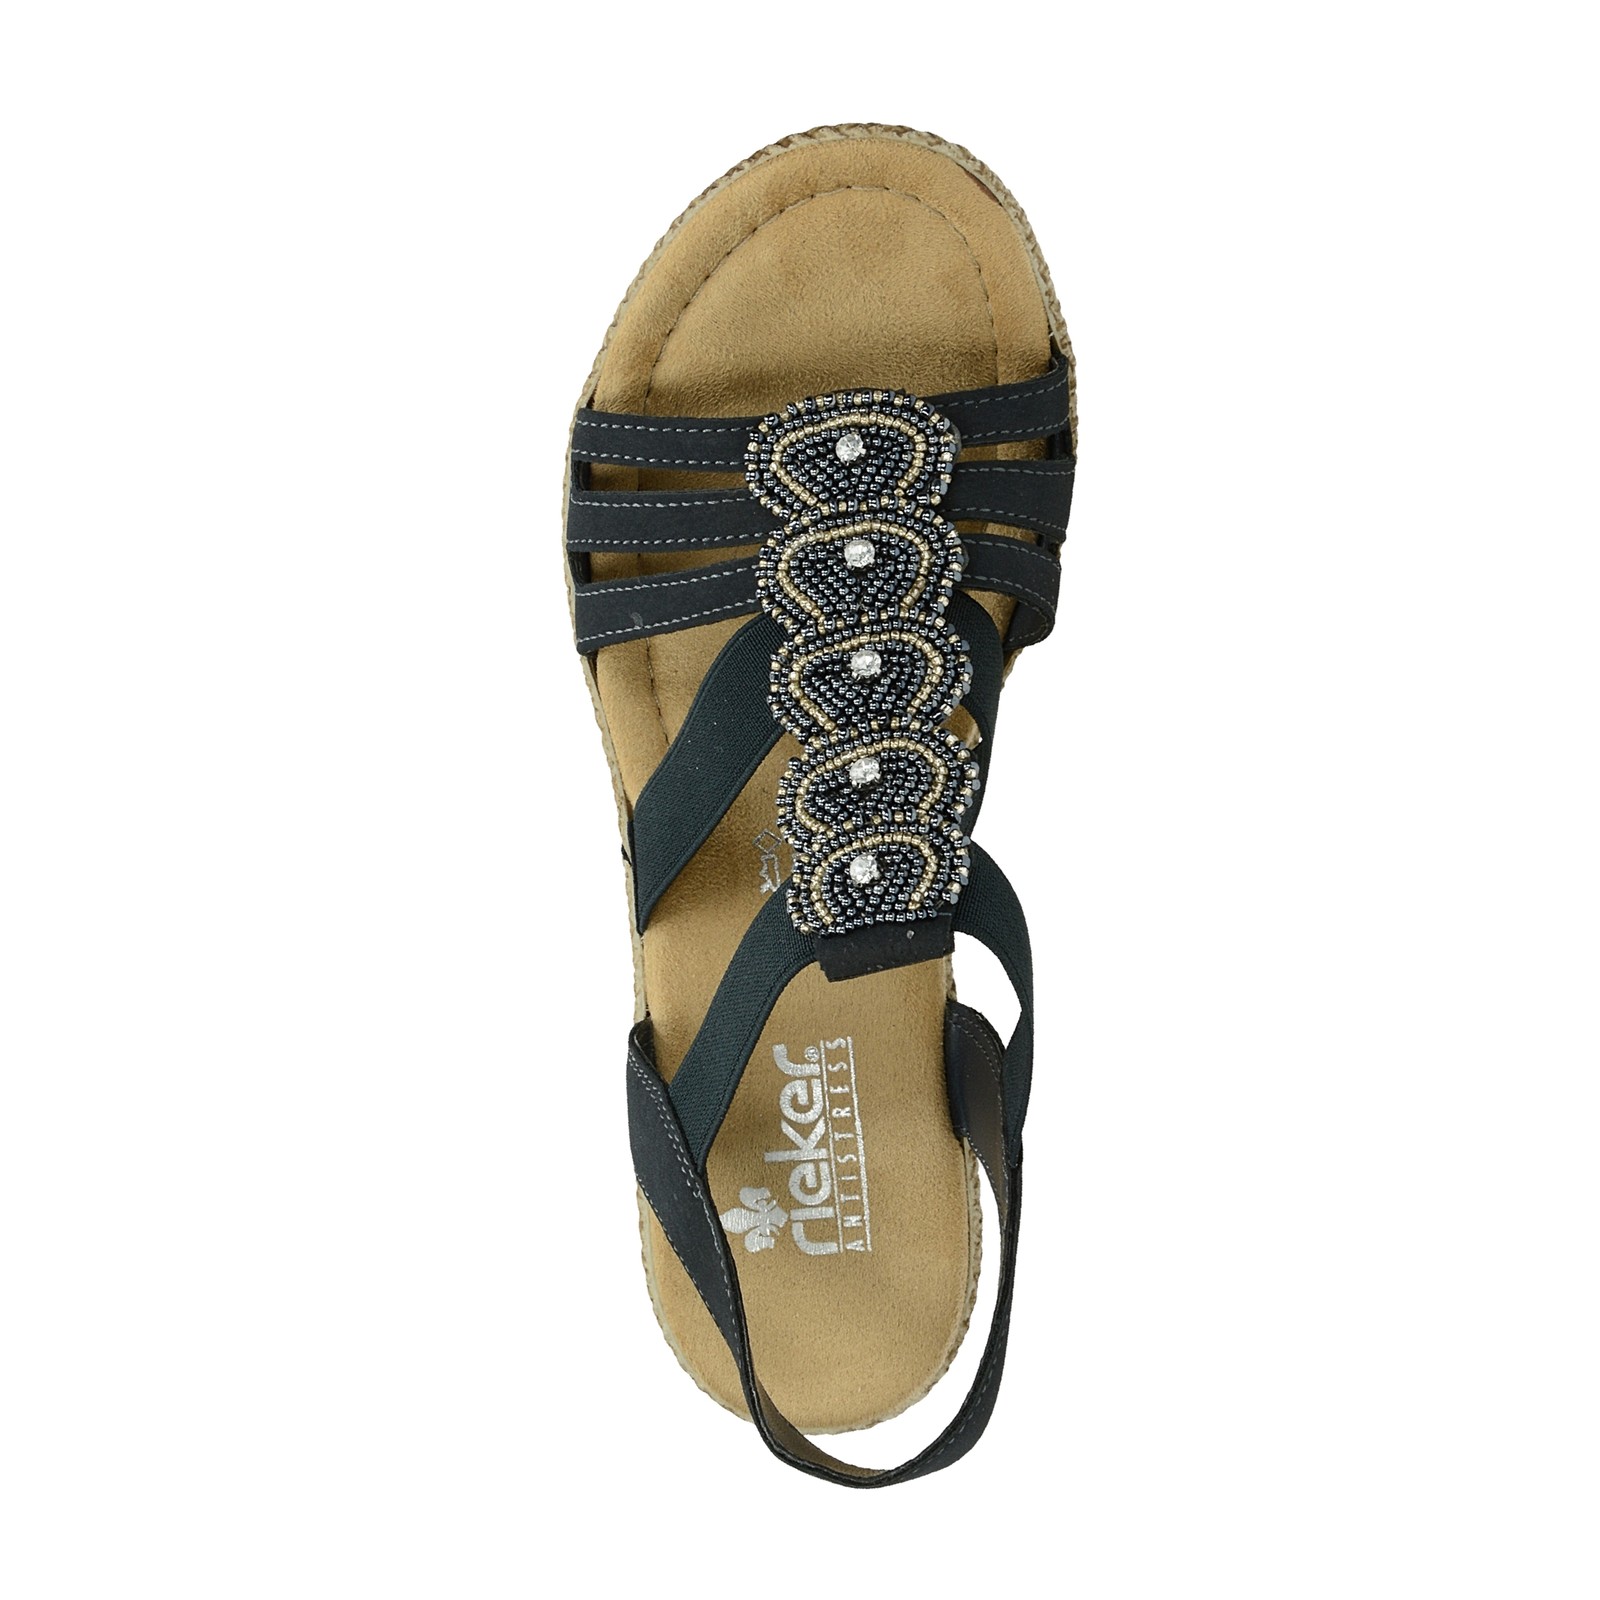 Rieker women´s sandals with stones - blue Robel.shoes